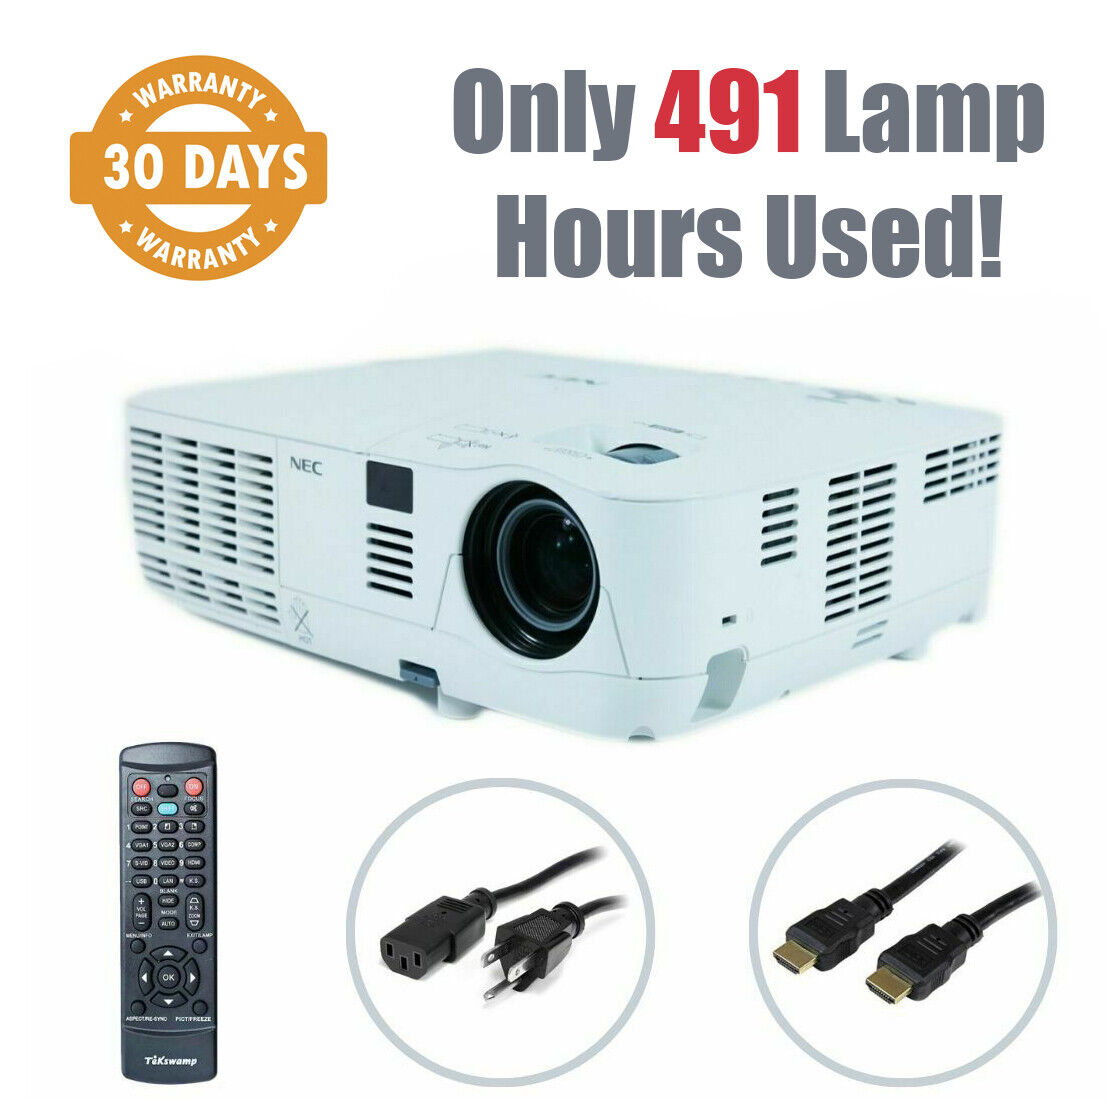 NEC V260X DLP Projector 2600 Lumens NP-V260X 1080i 3D Only 491 Lamp Hours  UsedのeBay公認海外通販｜セカイモン